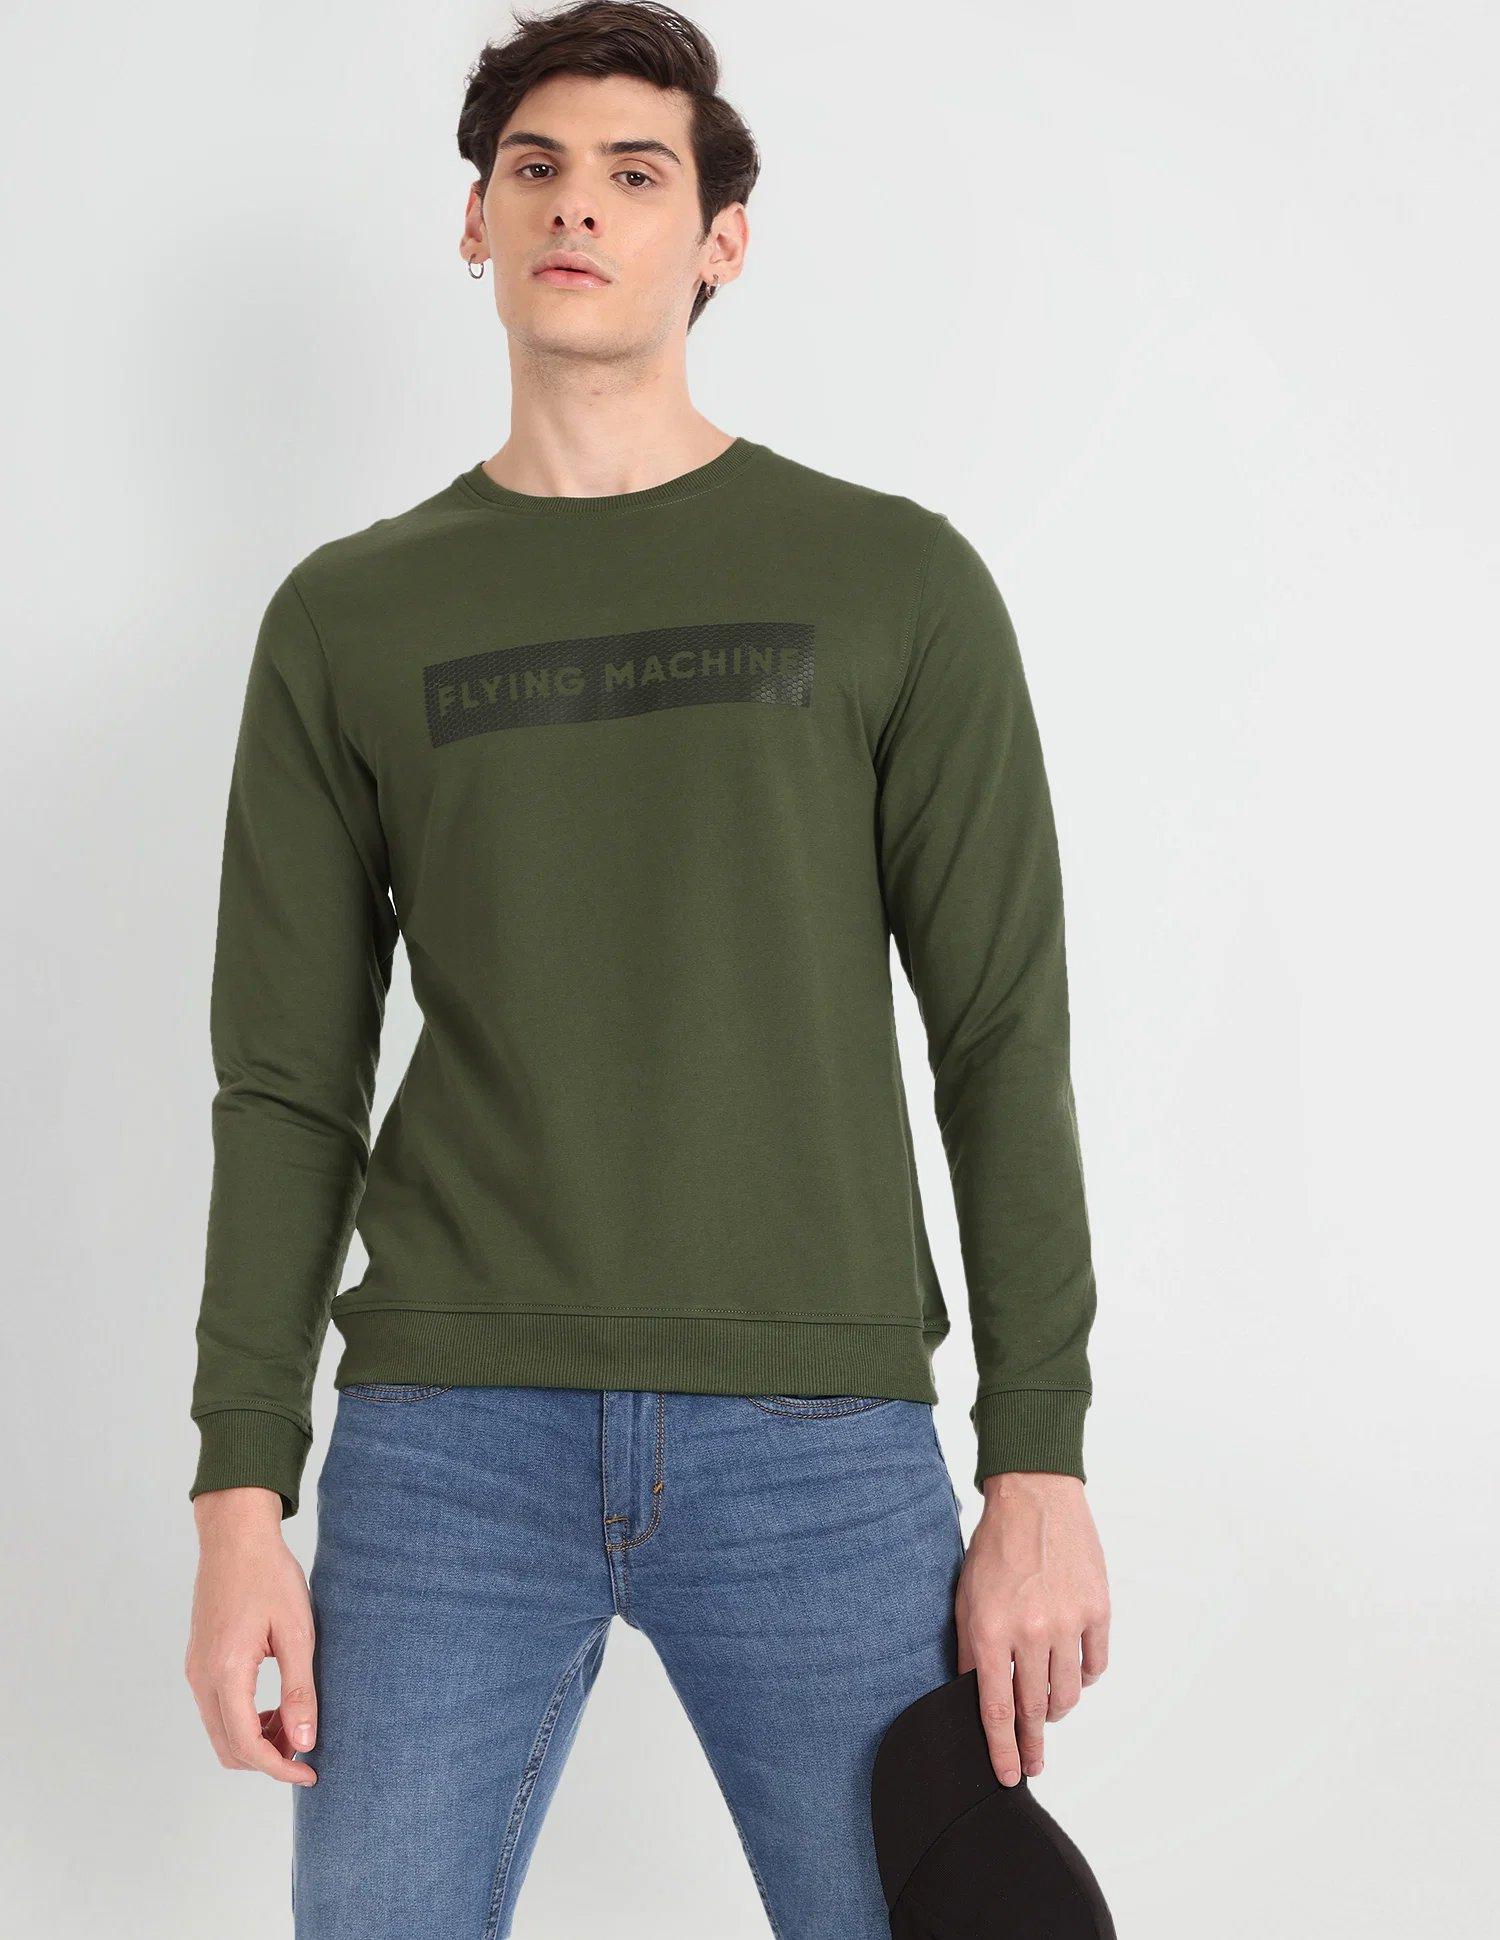 Textured Brand Print Sweatshirt